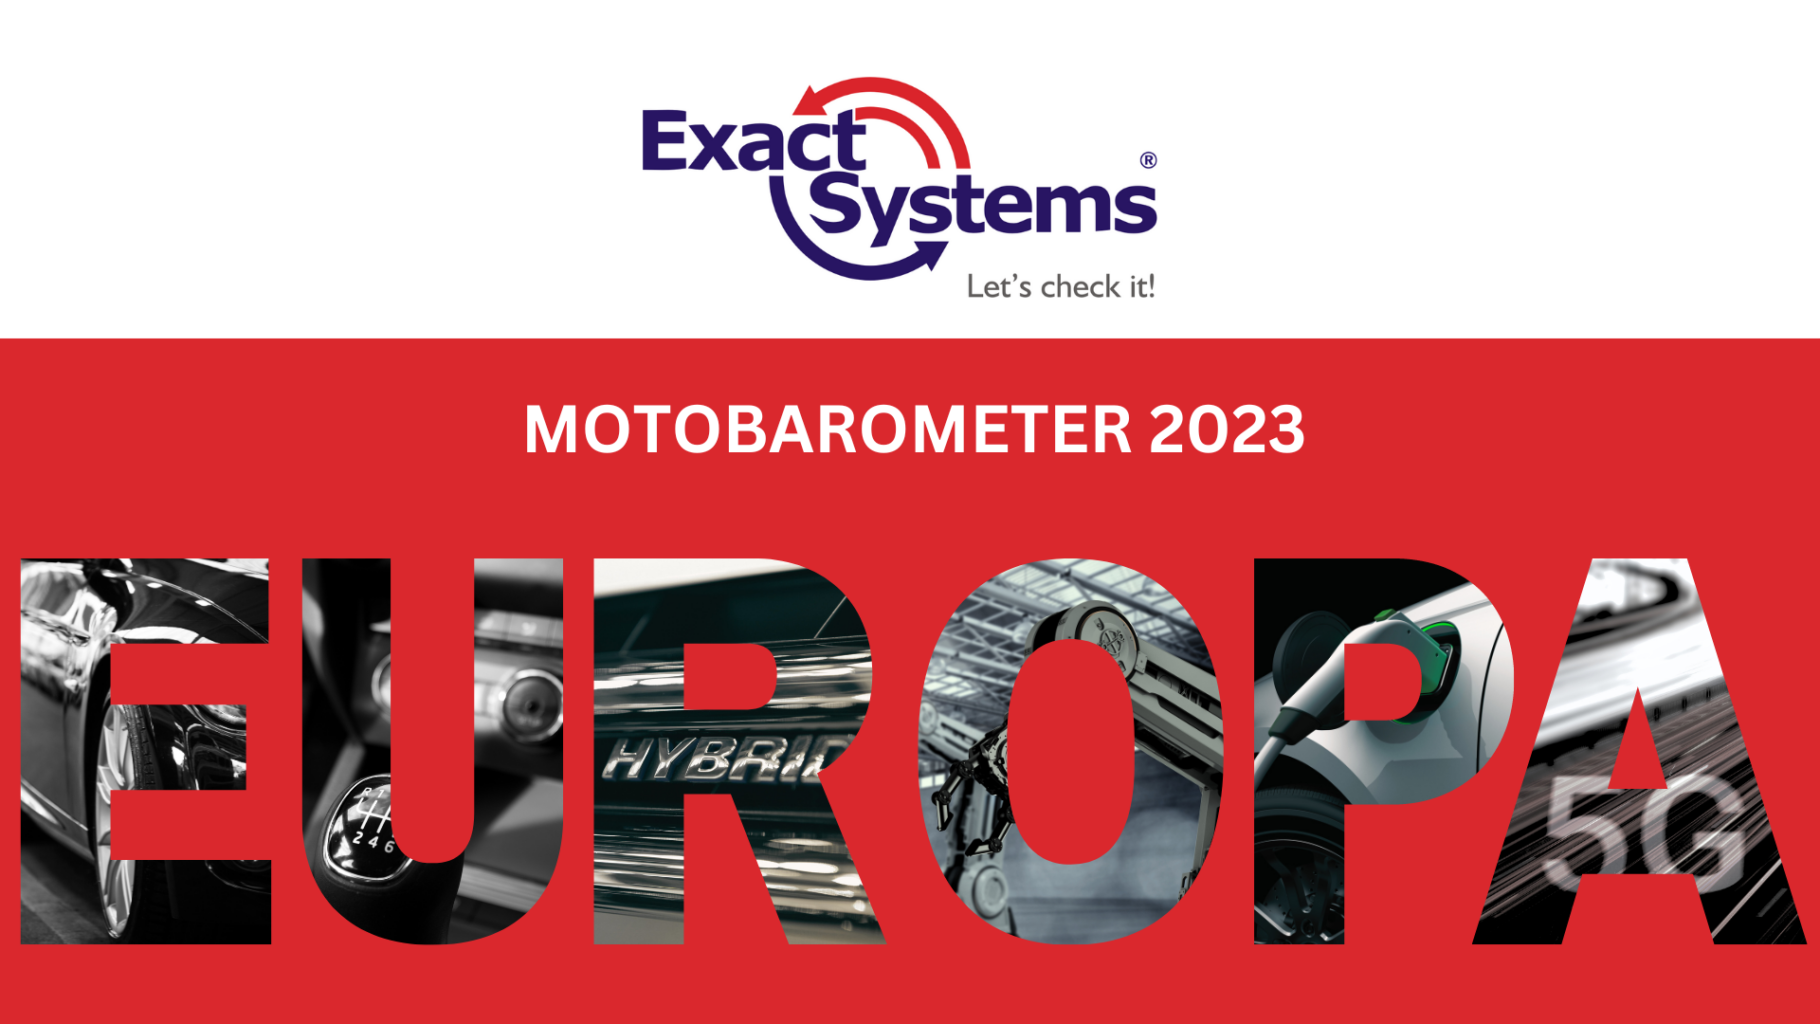 Exact Systems - Motobarometer 2023